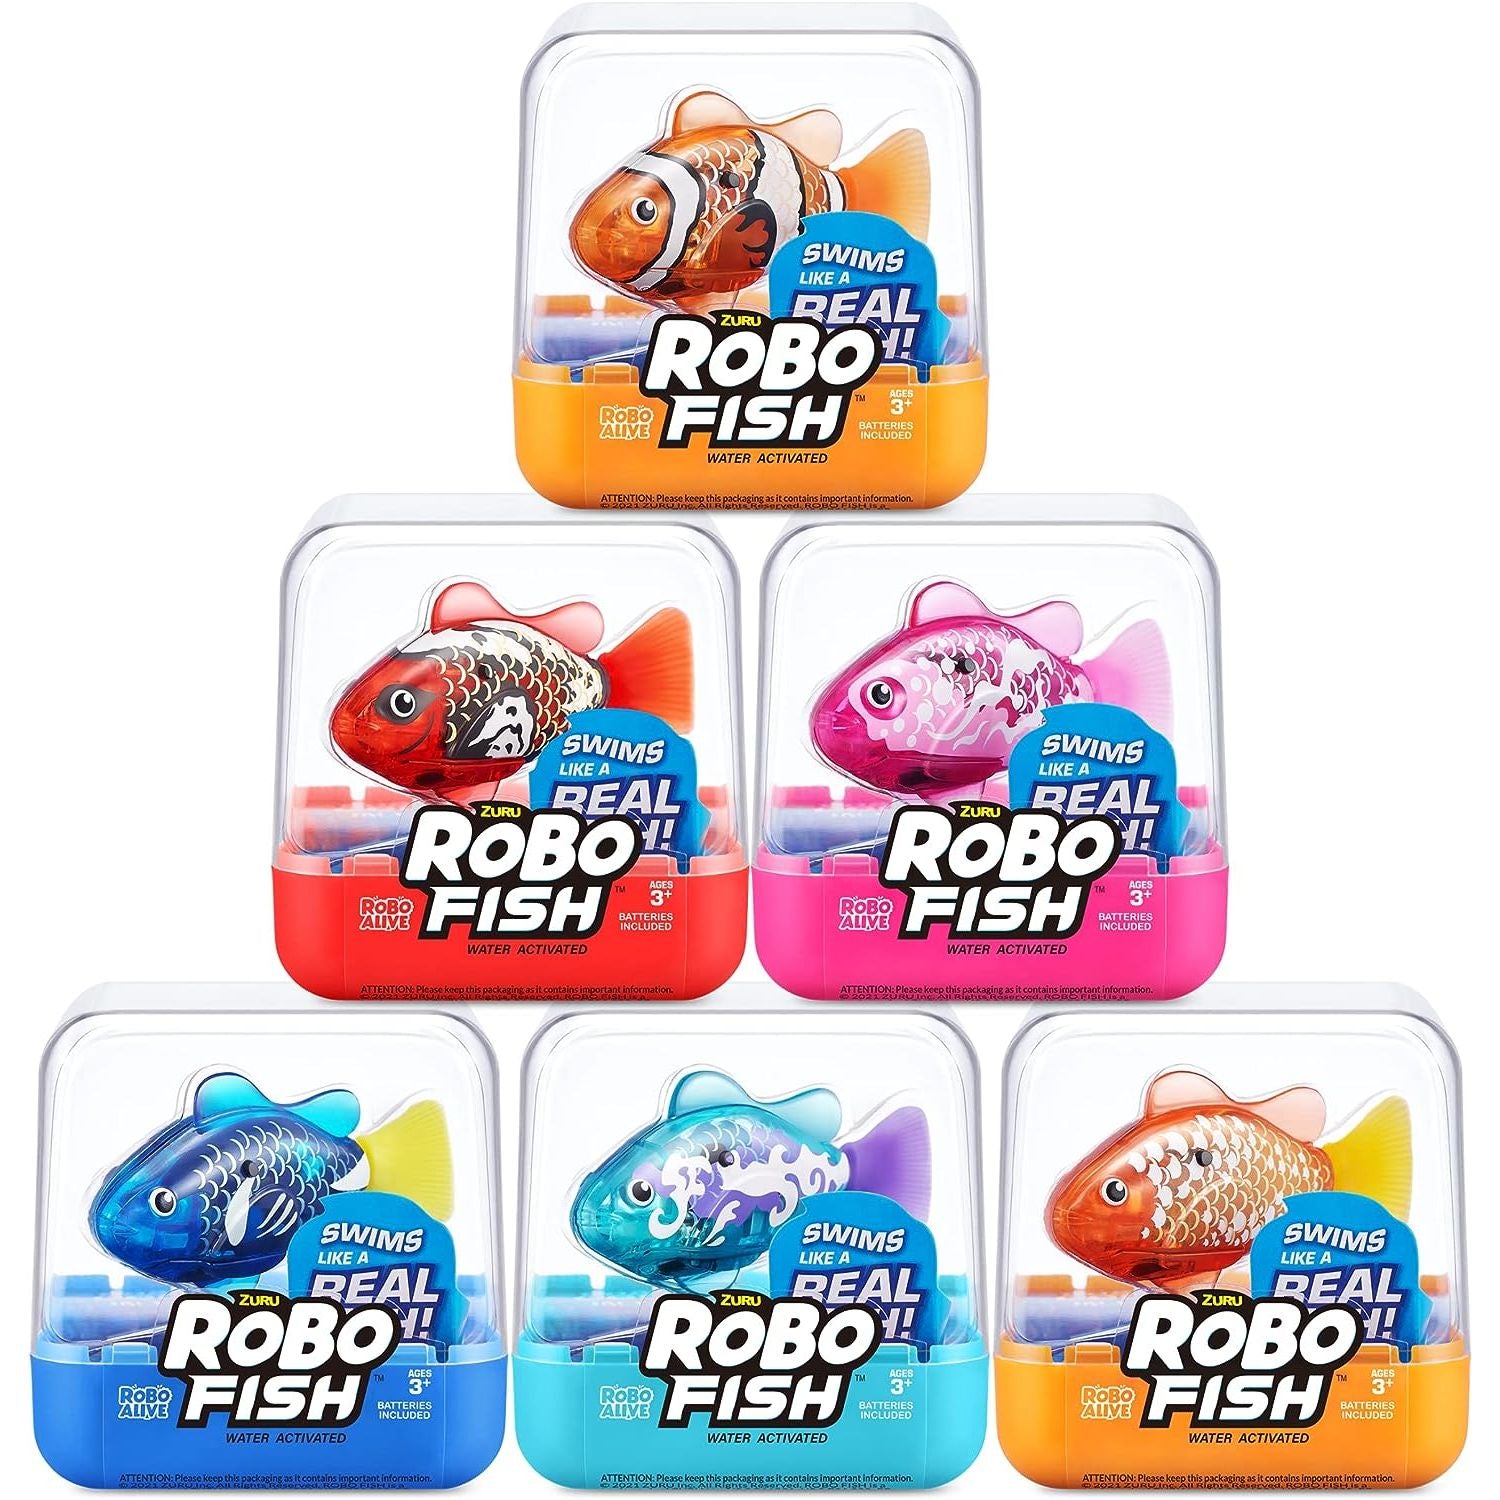 Robo Alive Robo Fish Robotic Swimming Fish برتقالية من ZURU يتم تنشيطها بالماء، يتغير لونها، وتأتي مع بطاريات - السلسلة 3